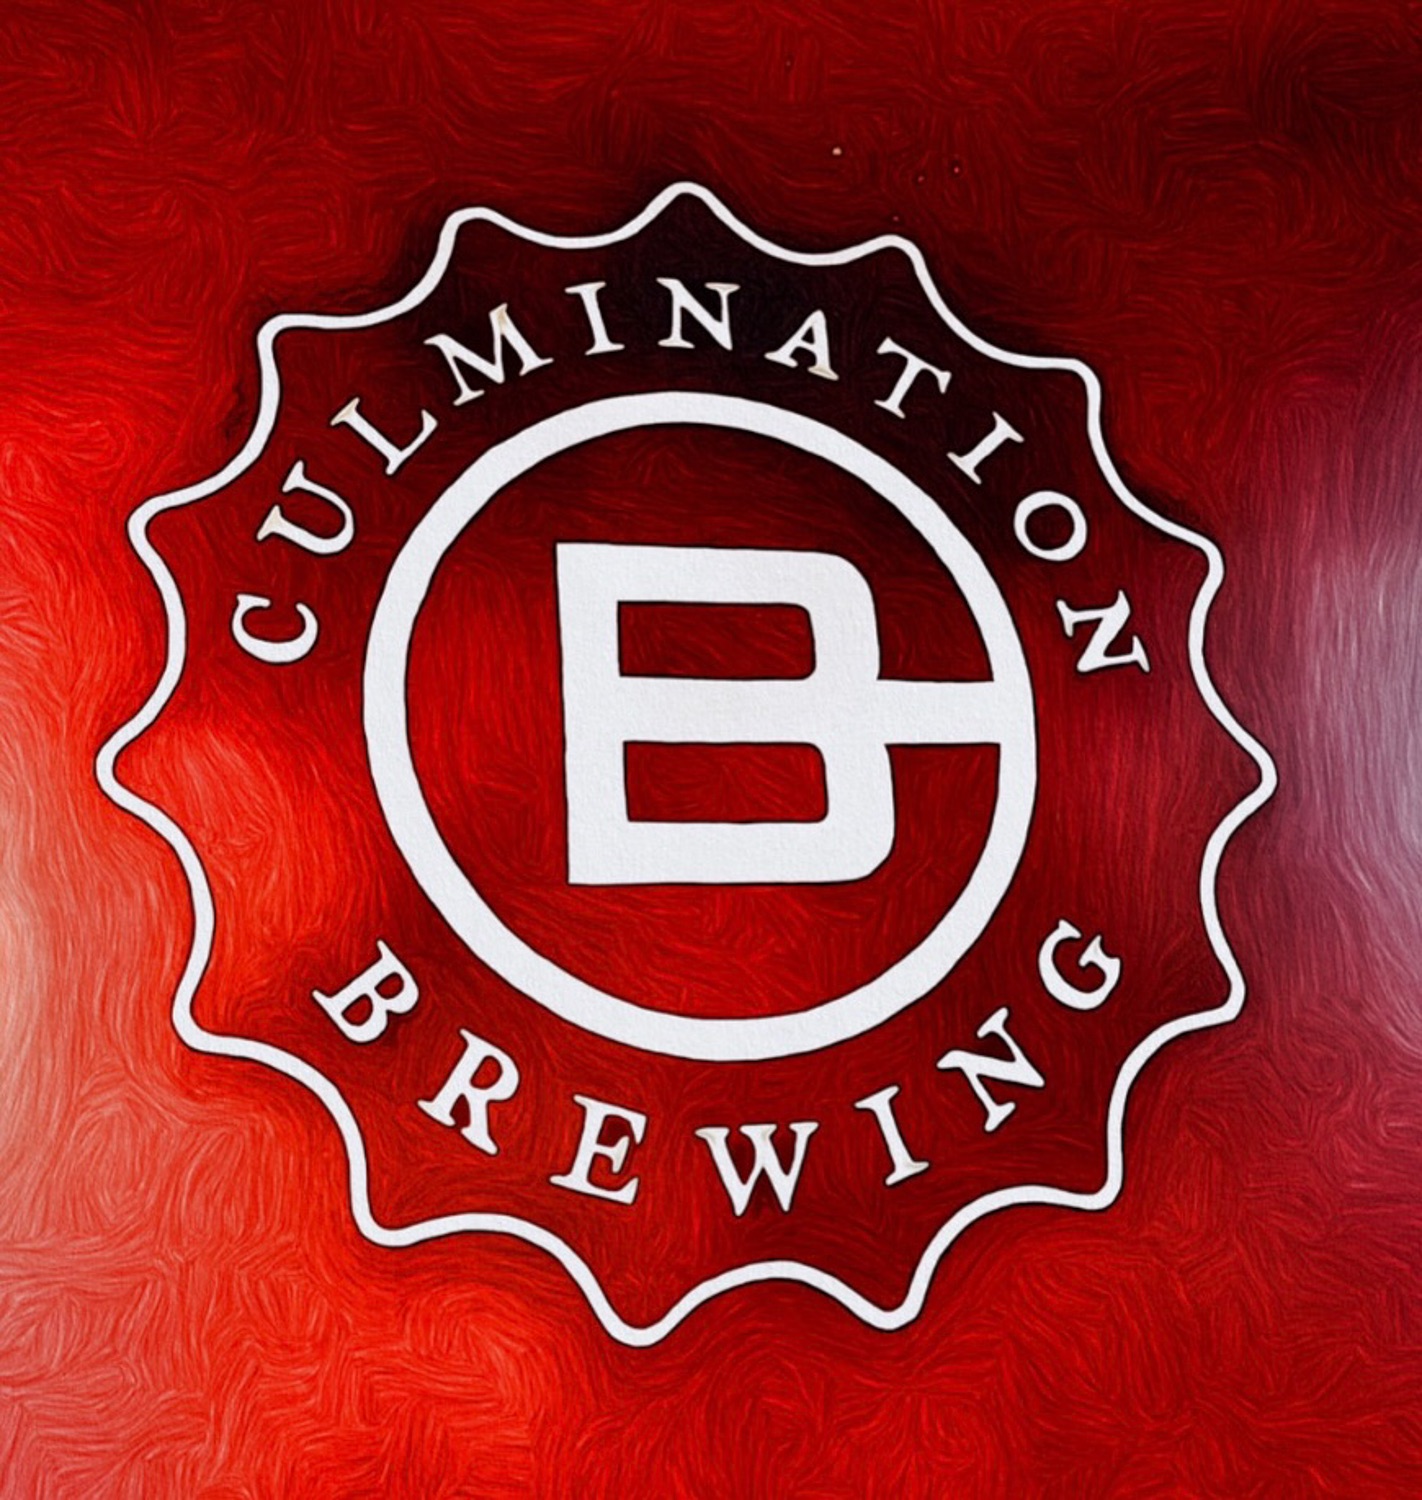 Tomas Sluiter Culmination Brewing - Craft Beer Podcast Episode 125 by Steven Shomler